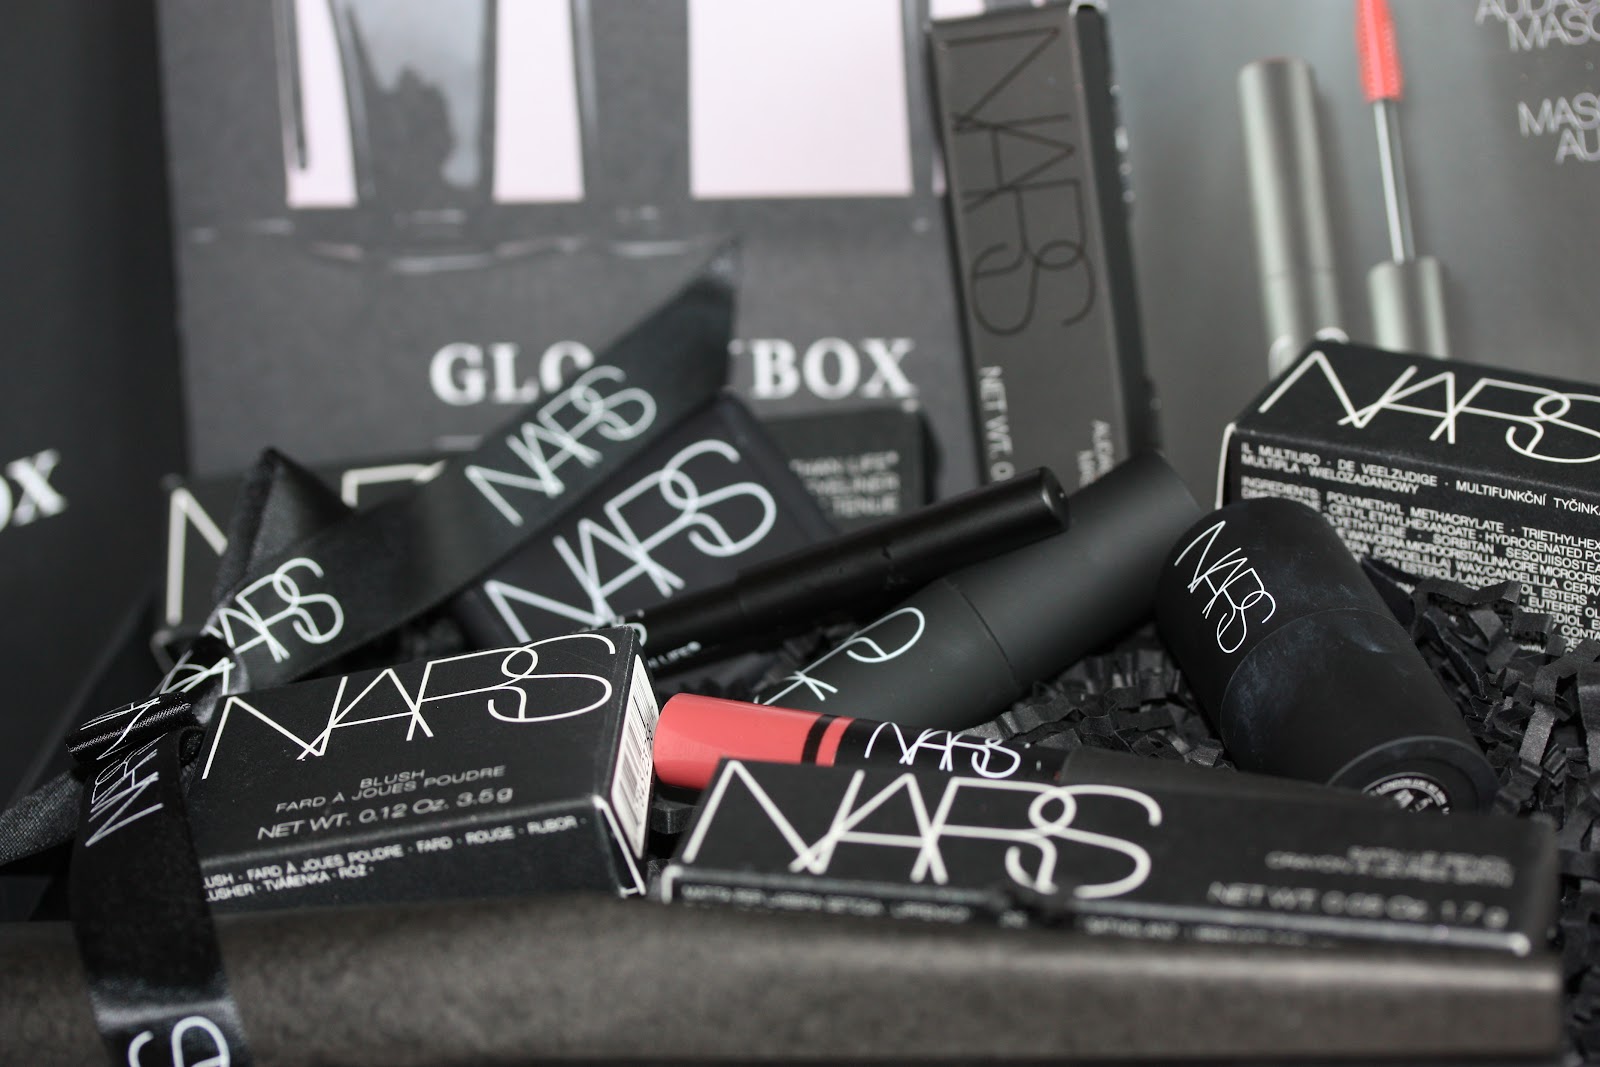 GlossyBox NARS Limited Edition